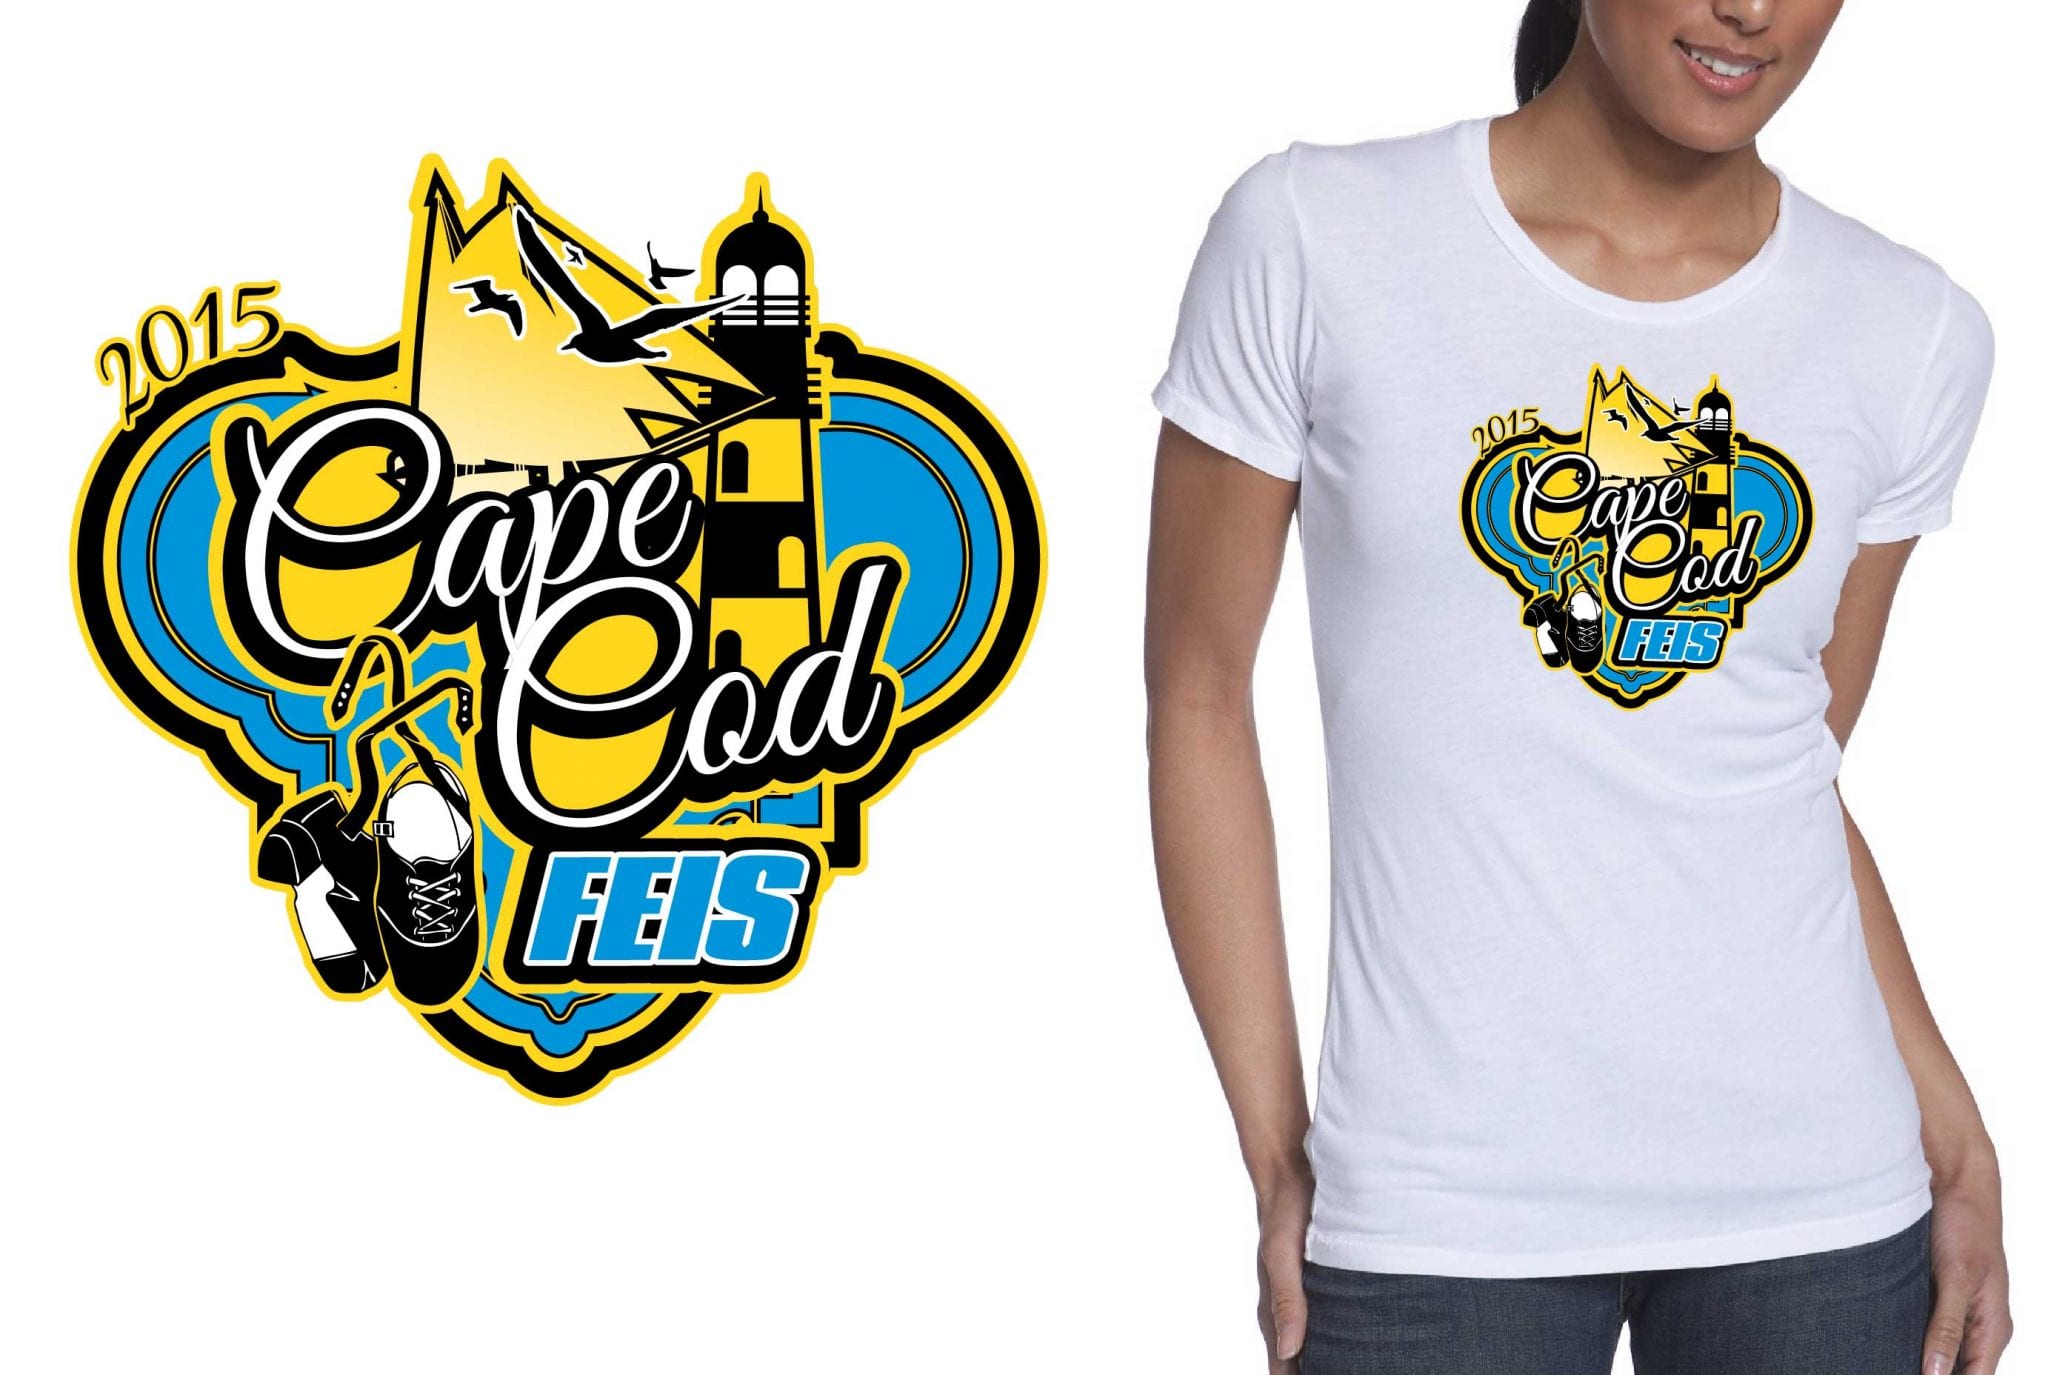 Nice vector tshirt logo design for 2015 Cape Cod Feis event - UrArtStudio